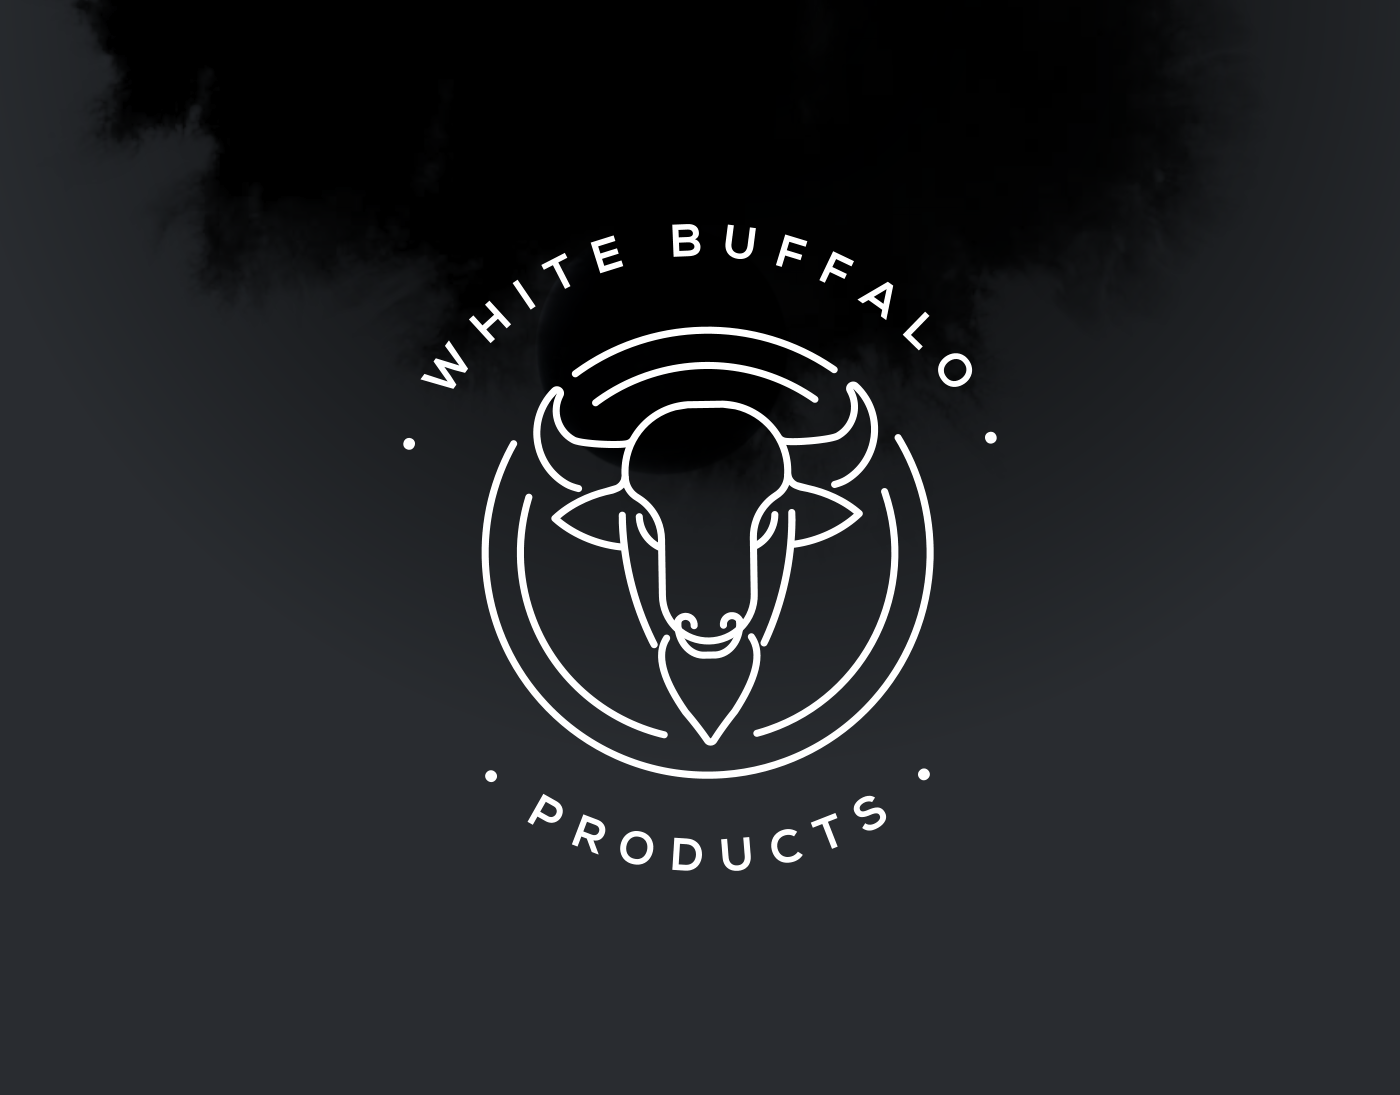 logo brand black White Buffalo Spa soap body identity outline